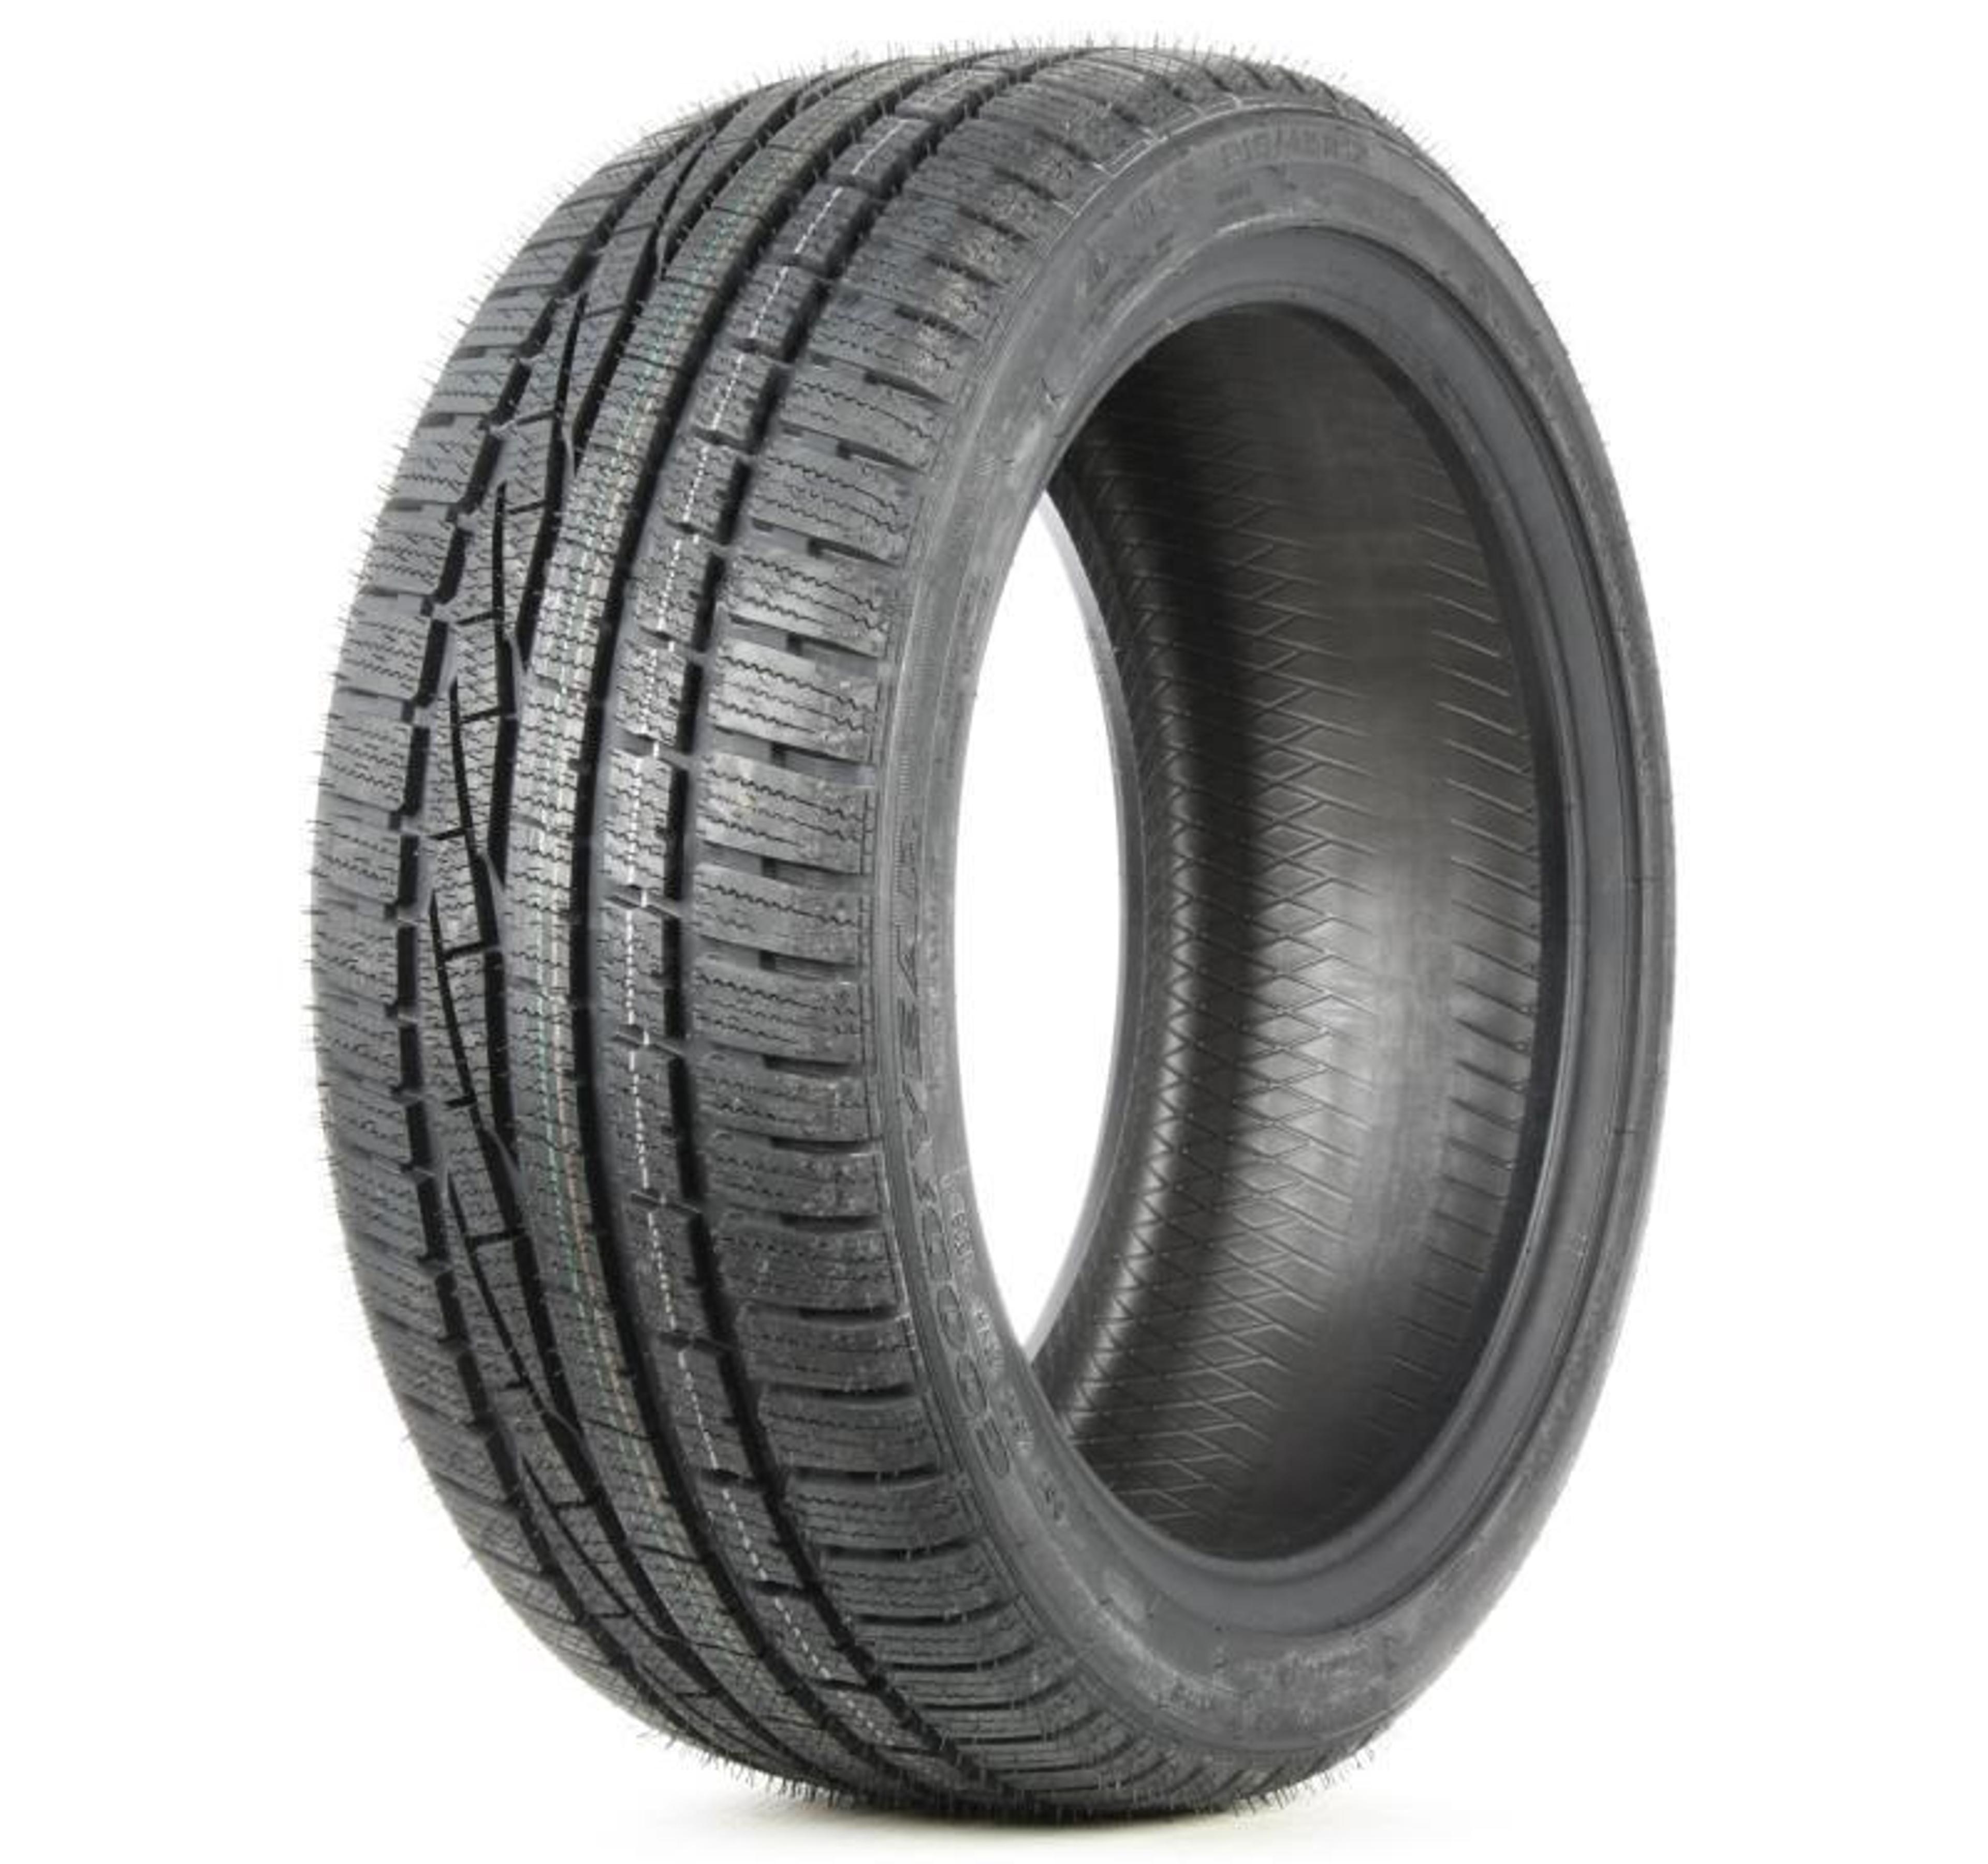 Tires Performance Buy Grip Goodyear Online | SimpleTire Ultra